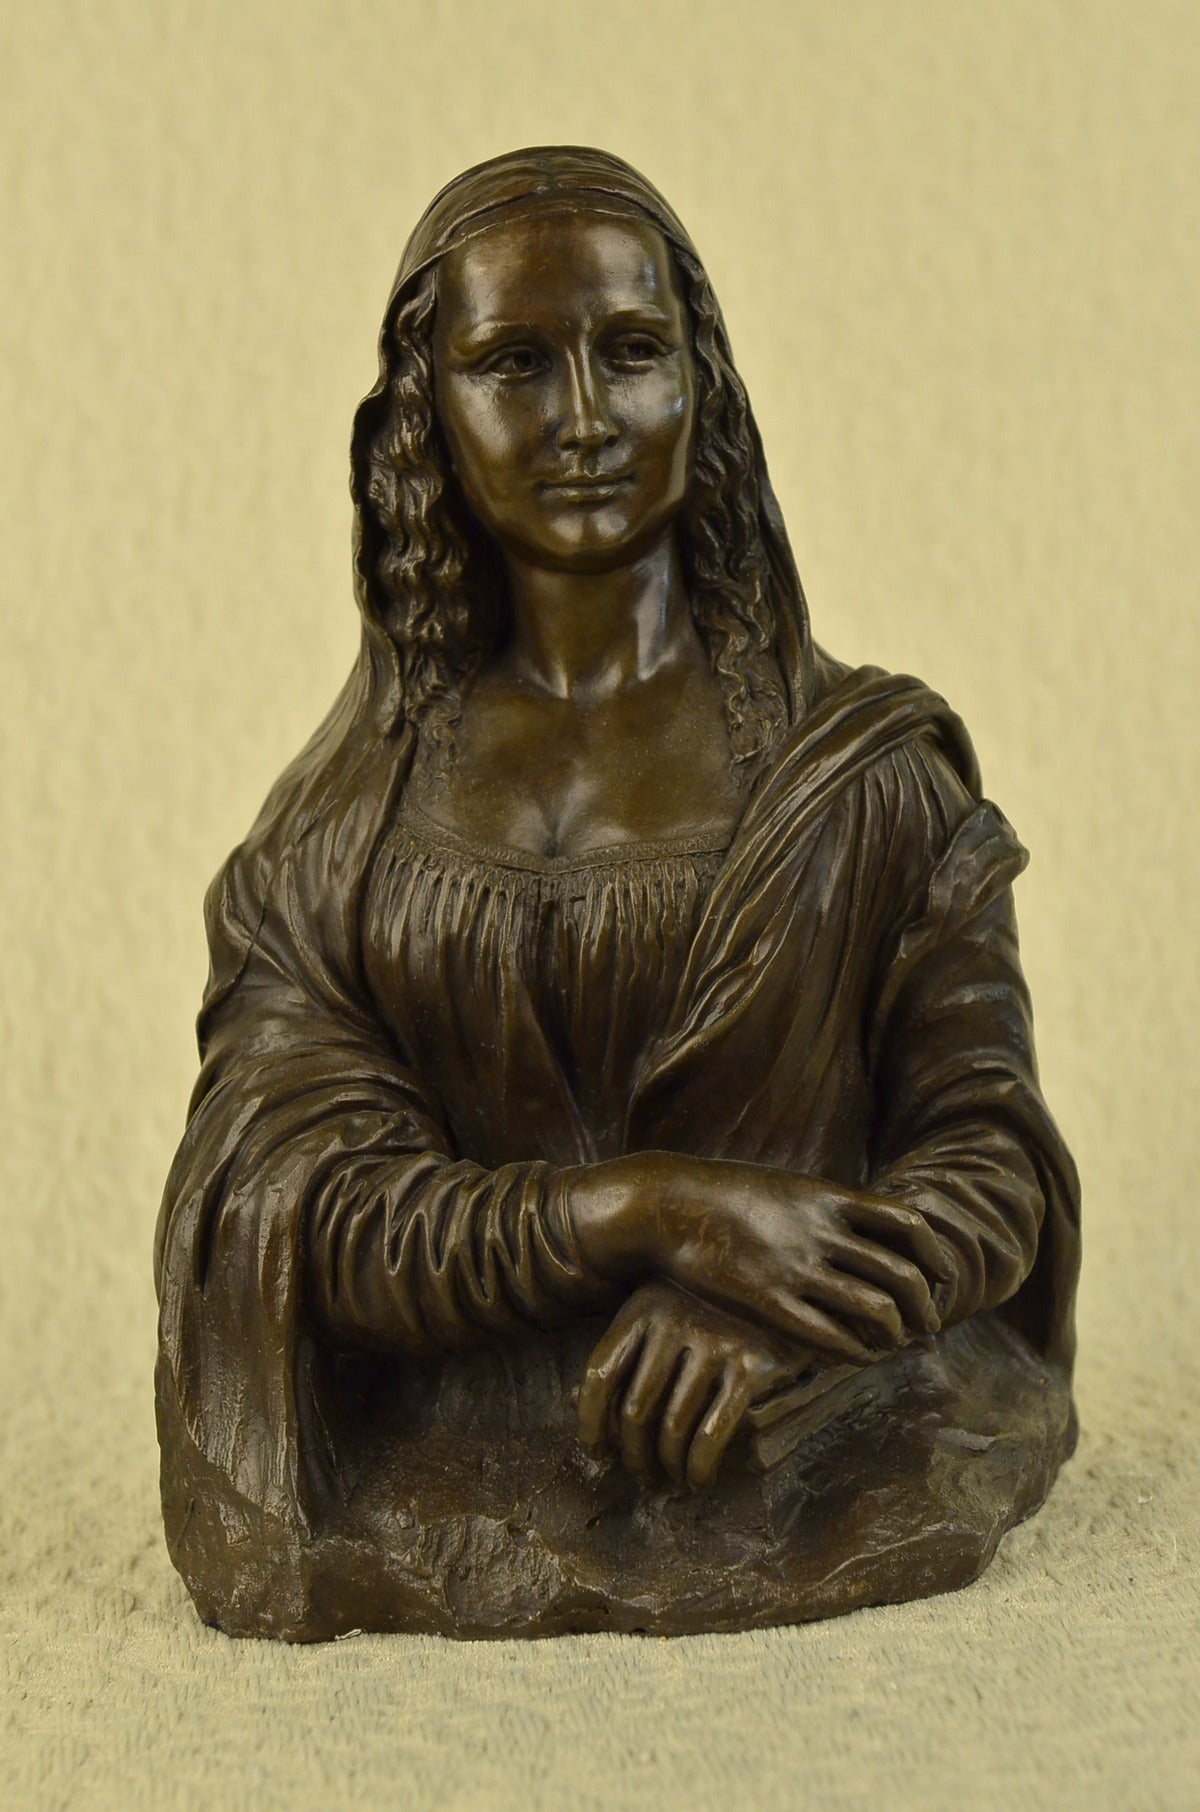 Handcrafted bronze sculpture SALE Modern Deco Art Mona Lisa French Art Signed